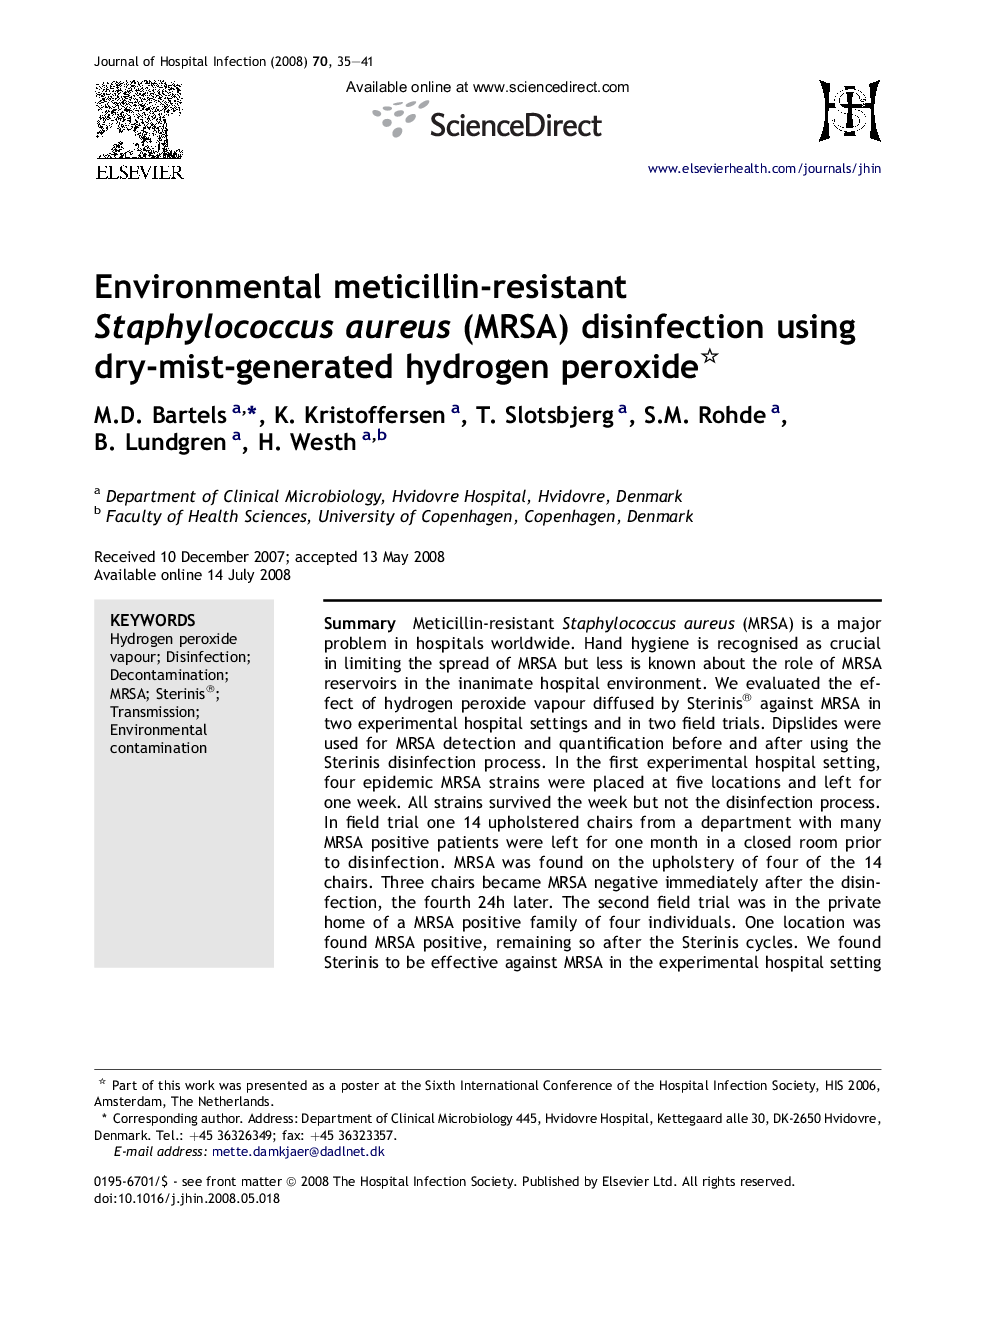 Environmental meticillin-resistant Staphylococcus aureus (MRSA) disinfection using dry-mist-generated hydrogen peroxide 